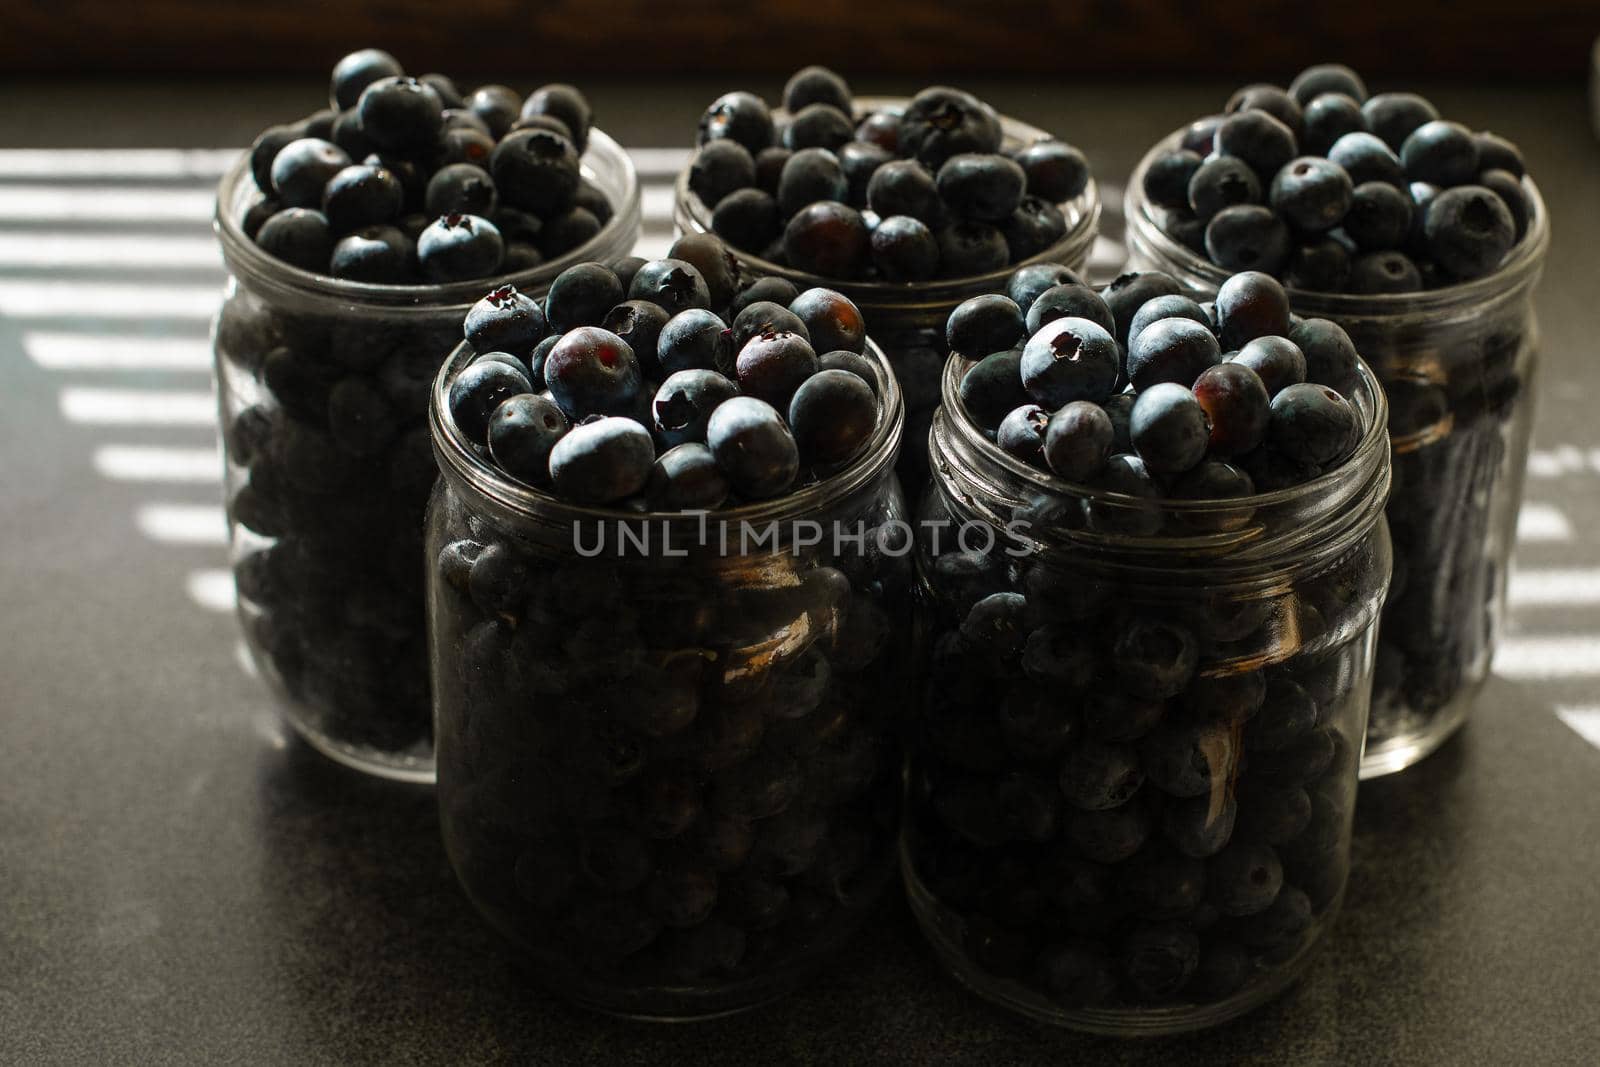 Several jars full of picked blueberries or honeysuckle berries on kitchen table in sunlight.